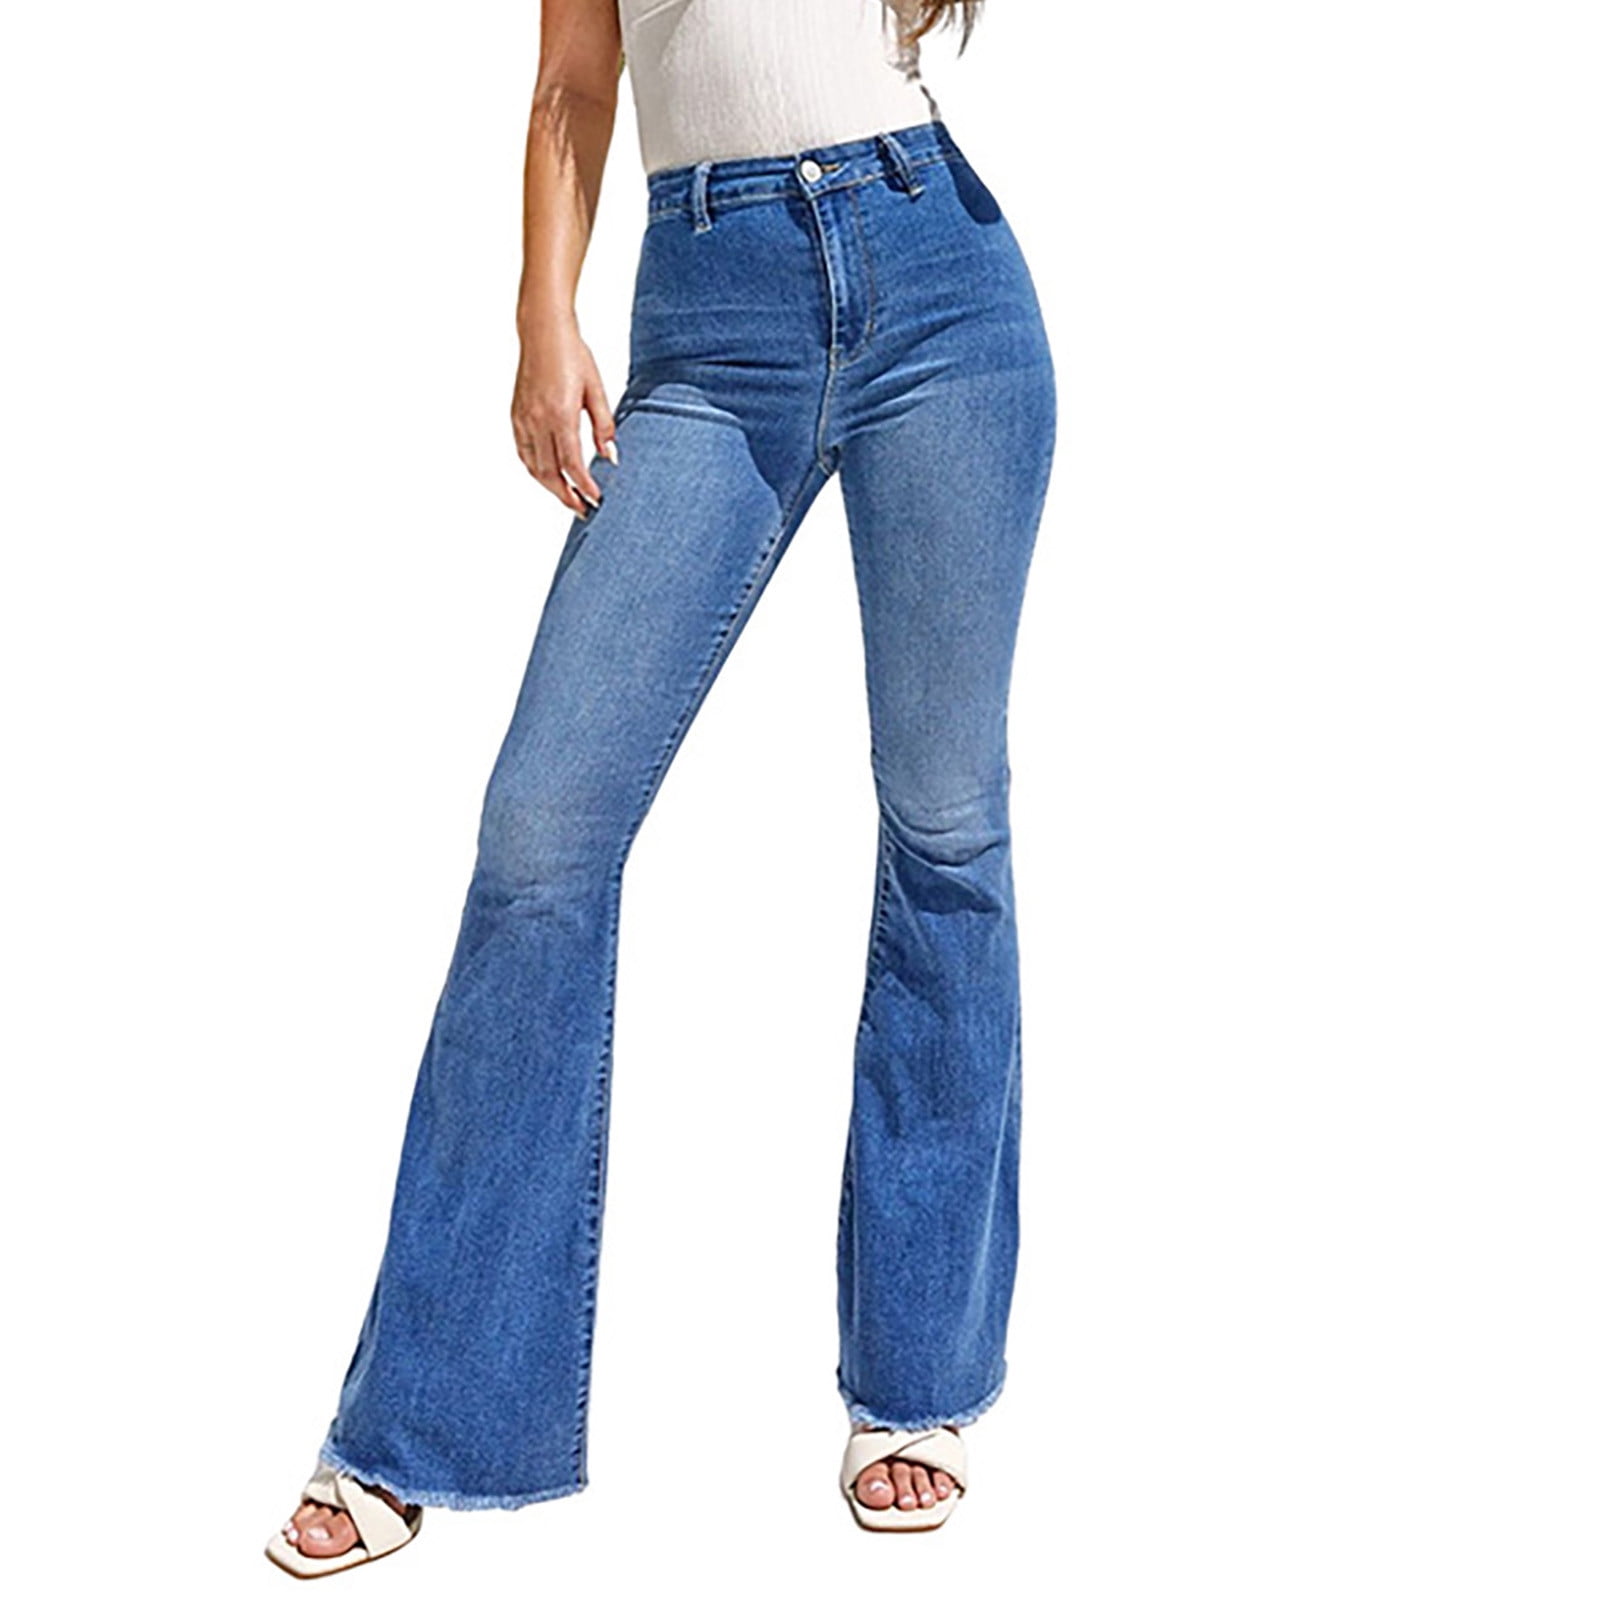 pbnbp Fashion Womens Bell Bottom Jeans Mid Rise Stretch Skinny Falred Leg  Full Length Denim Jeans Pants Boot Cut Jeans for Women on Clearance 